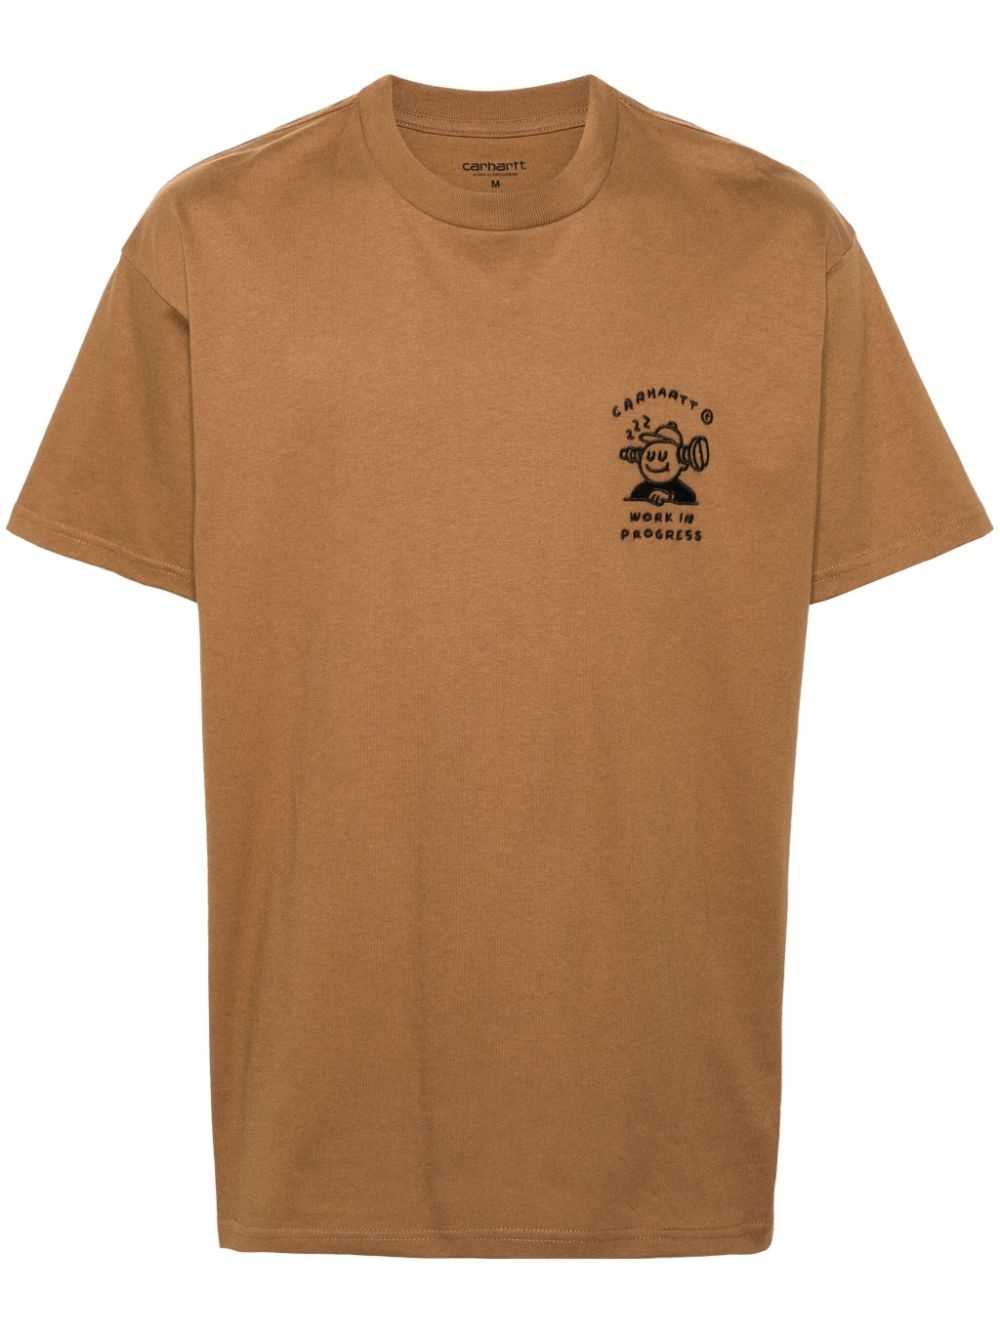 Carhartt T-shirt Marrone Uomo - 2